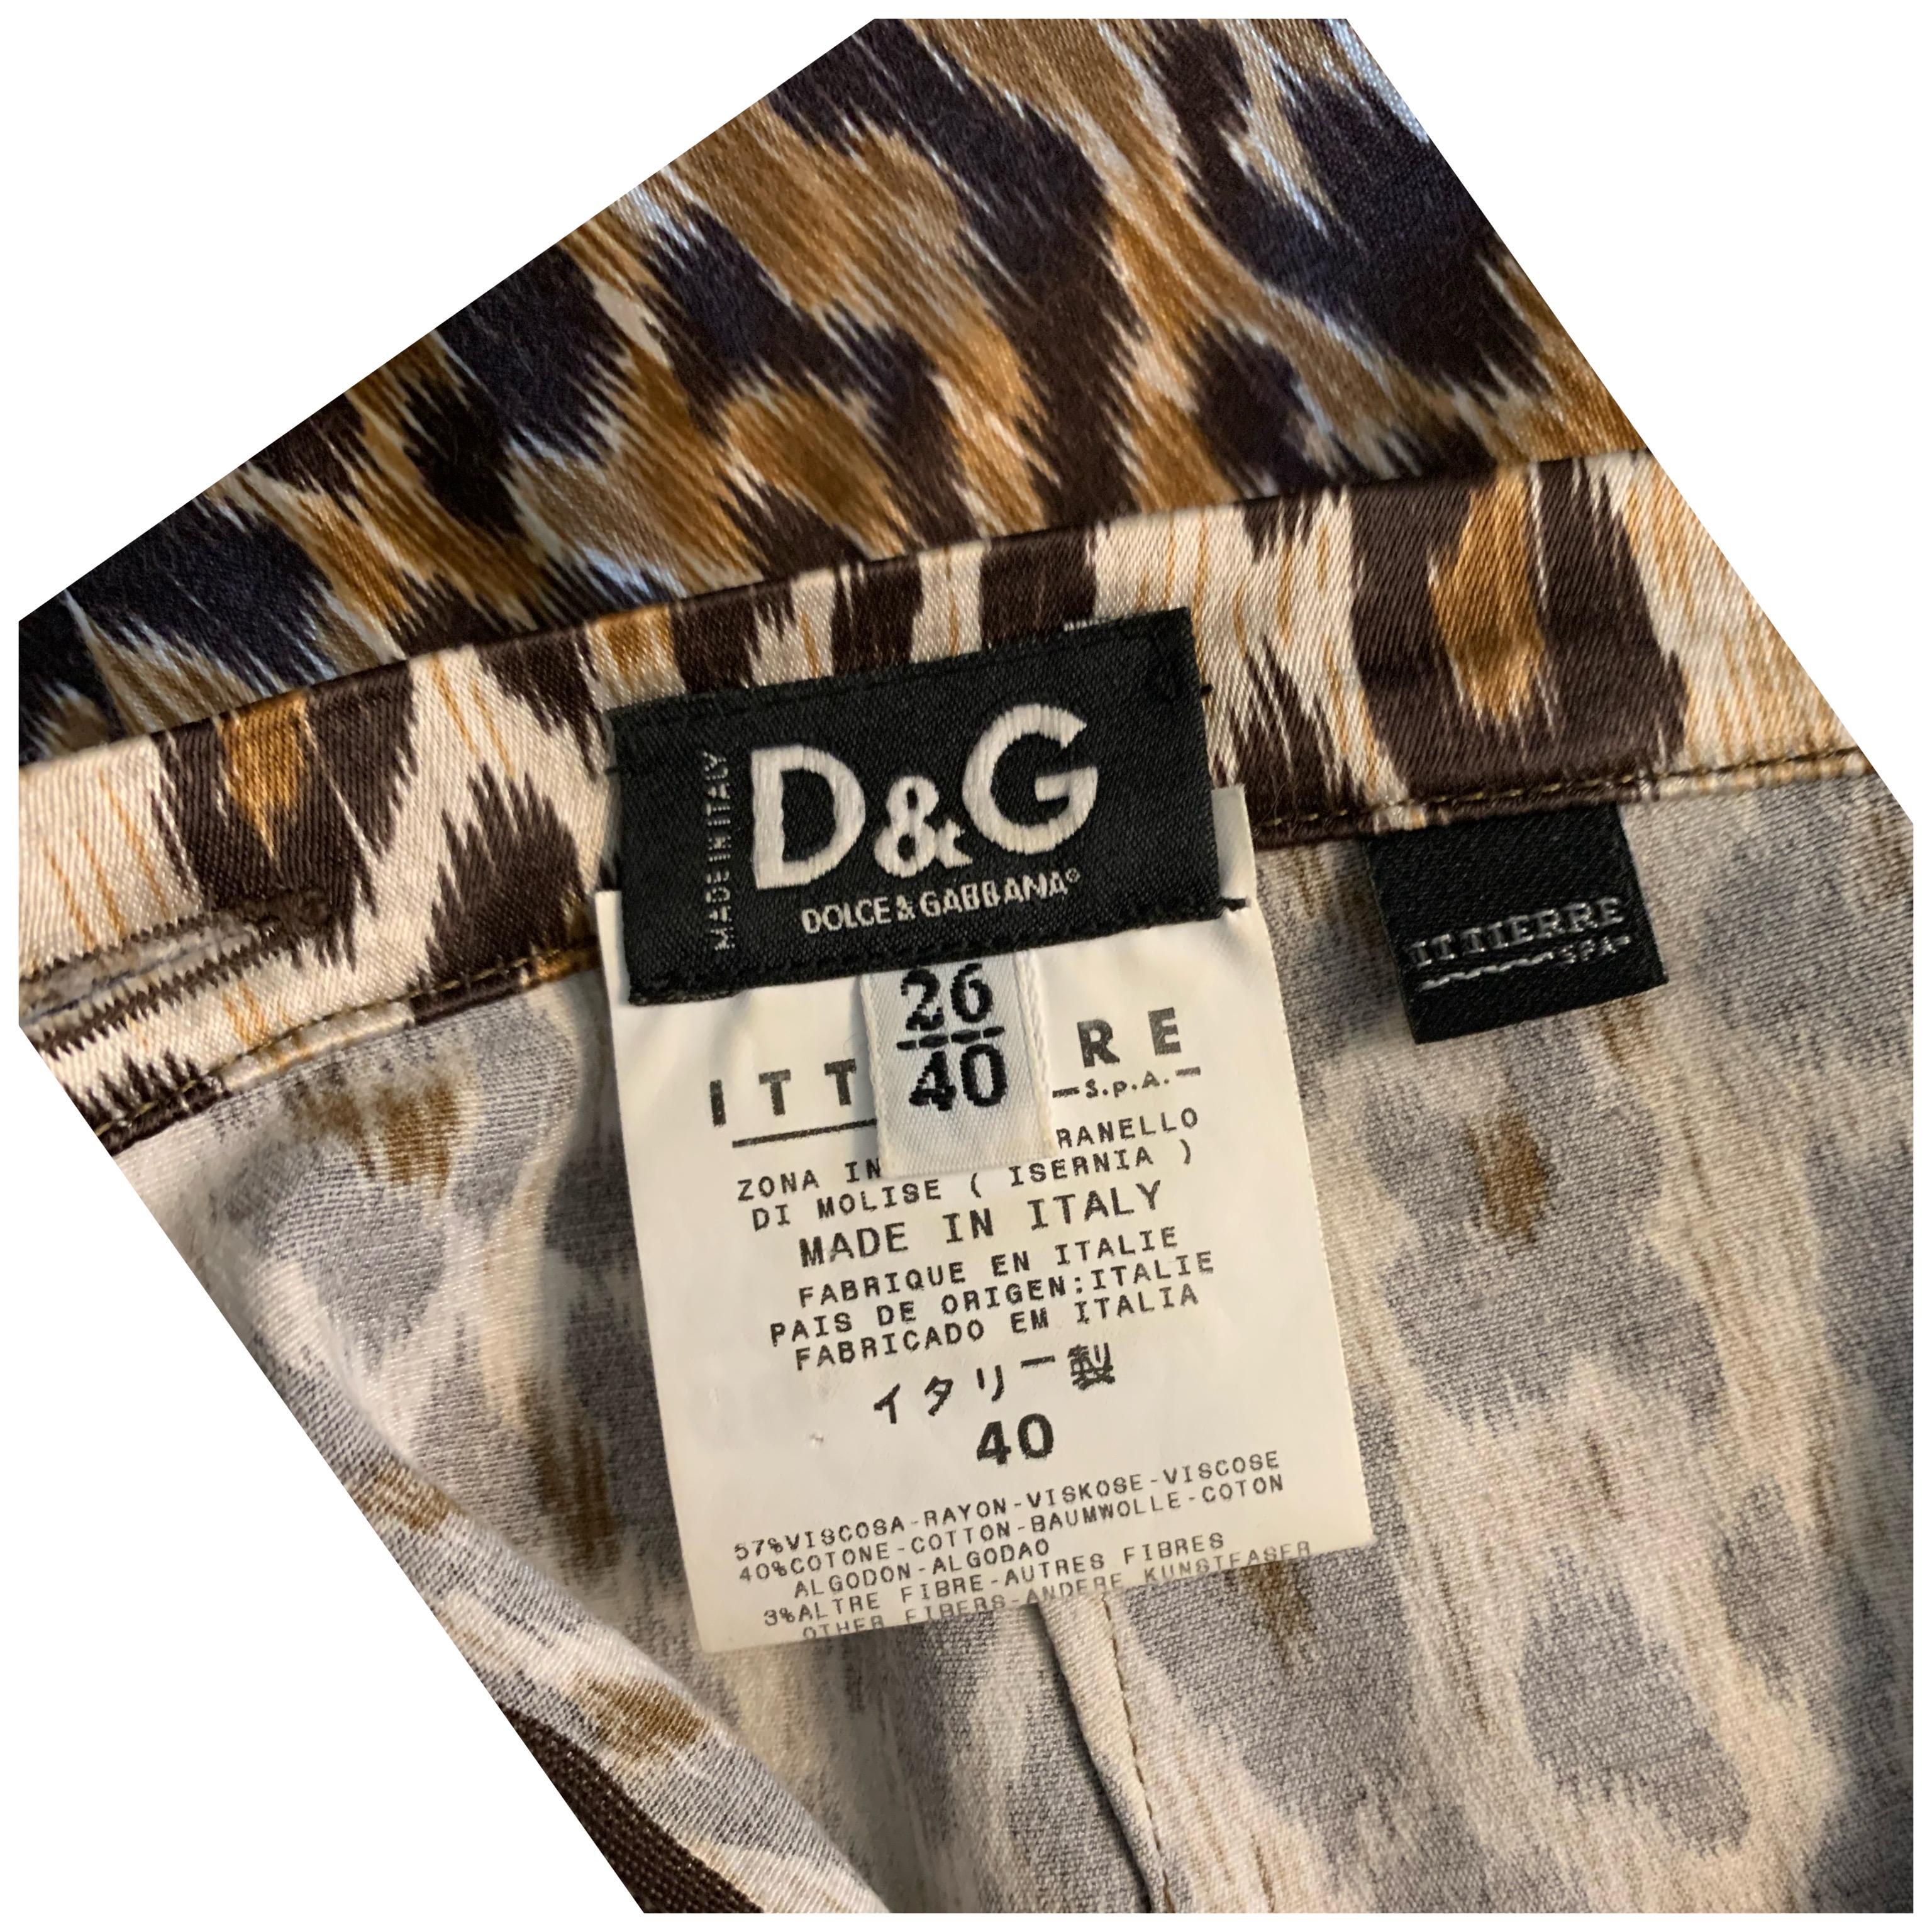 D & G Dolce Gabbana Signature « Dolce Vita » Jupe crayon léopard taille 4-6 2